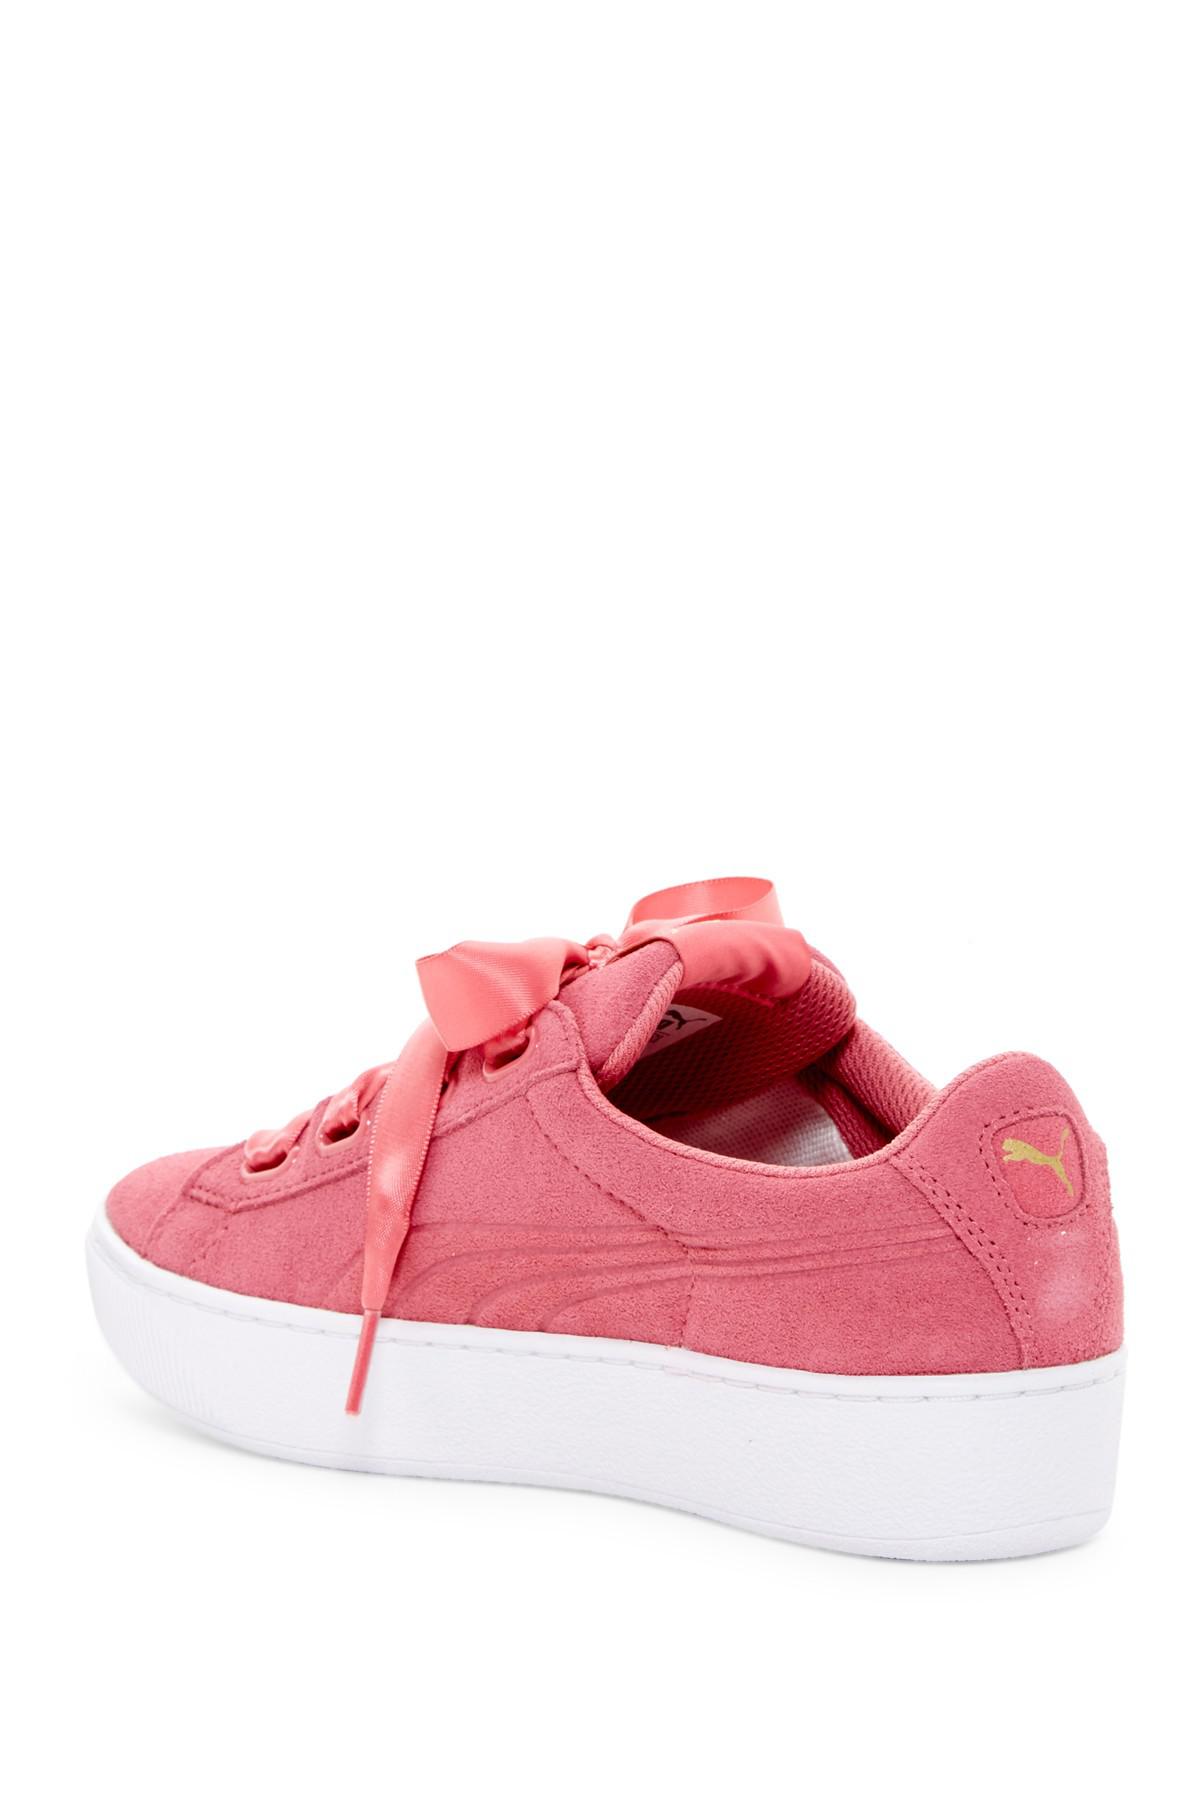 puma pink ribbon shoes